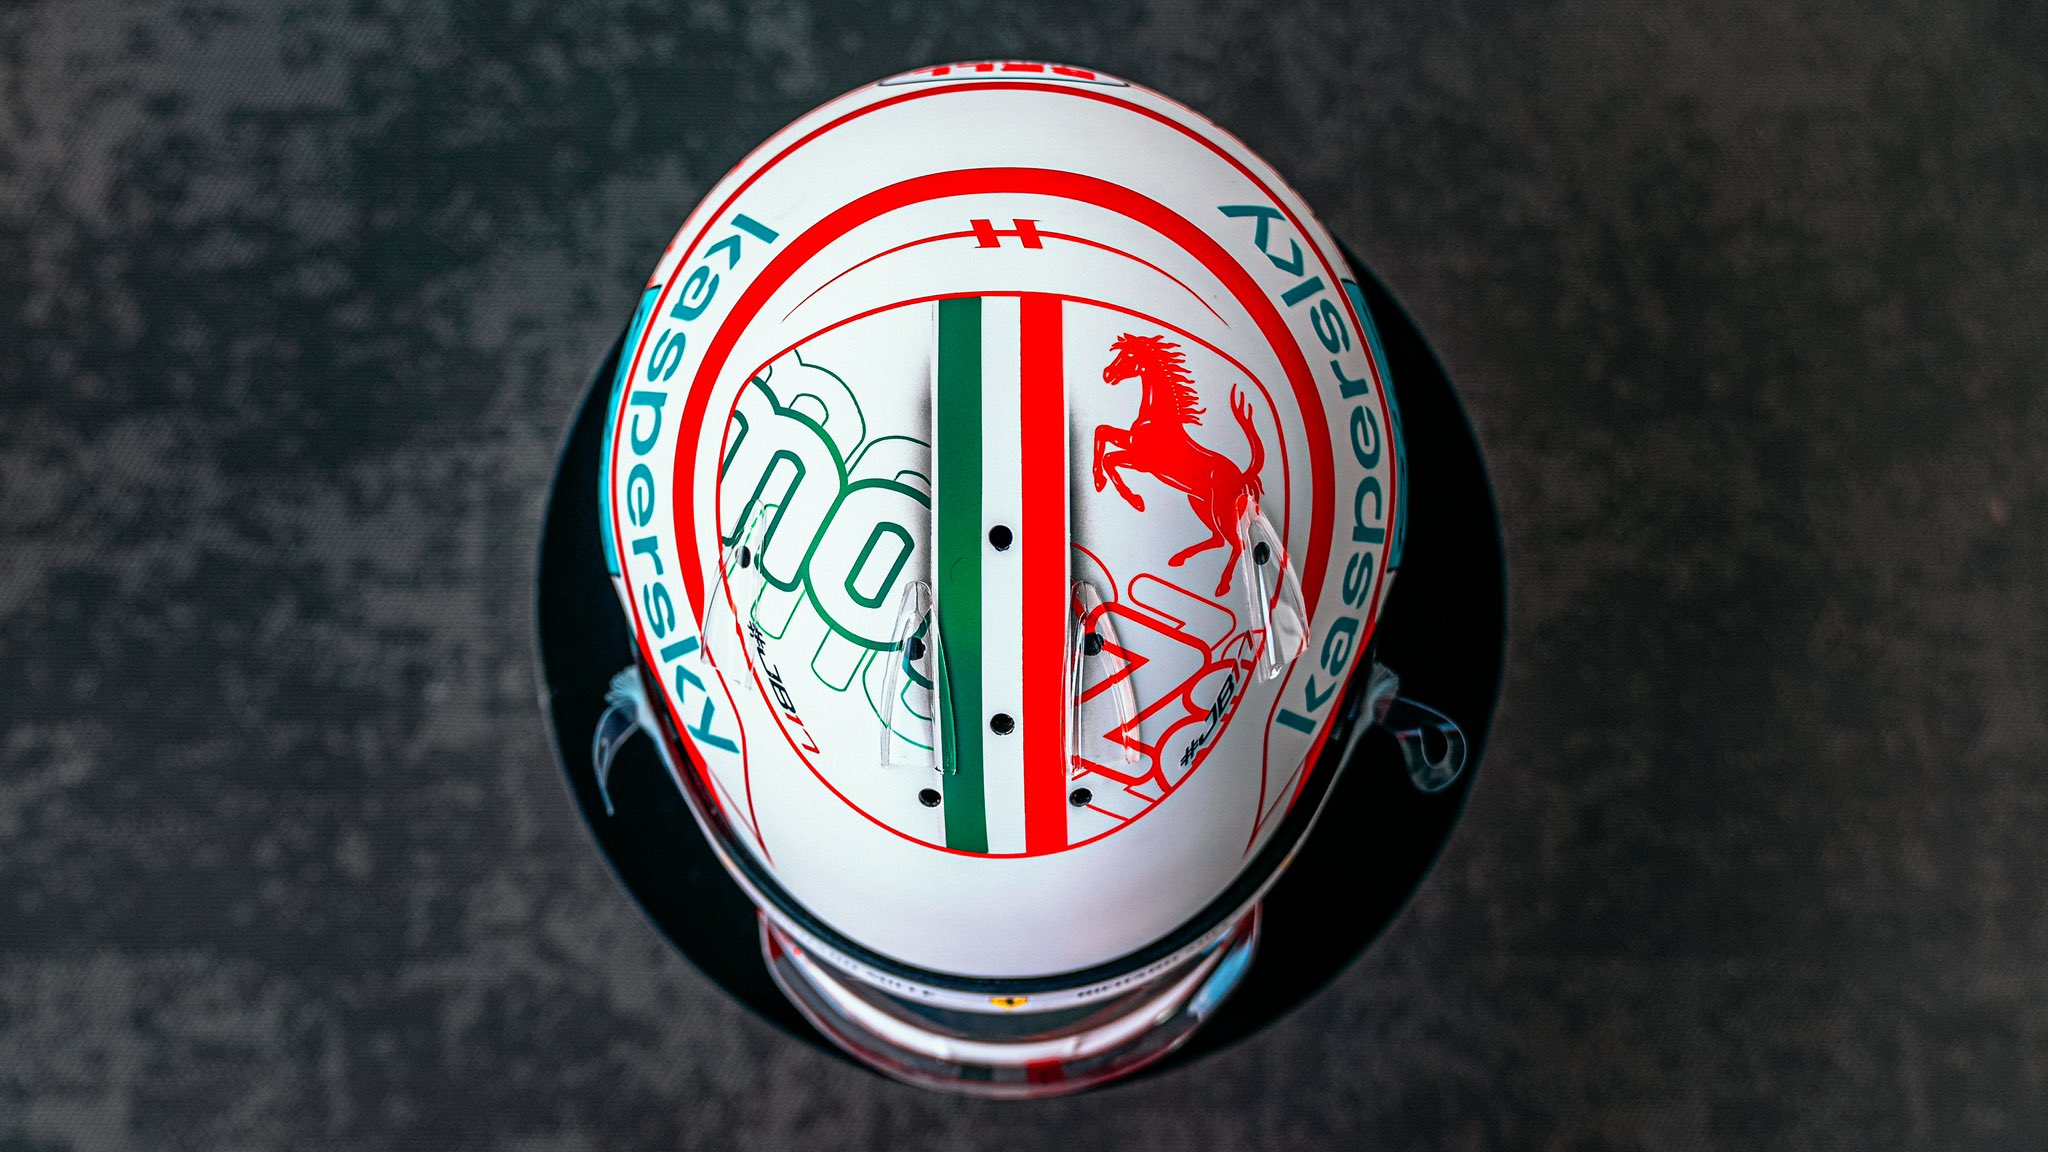 Charles Leclerc's 2021 Italian Grand Prix helmet design